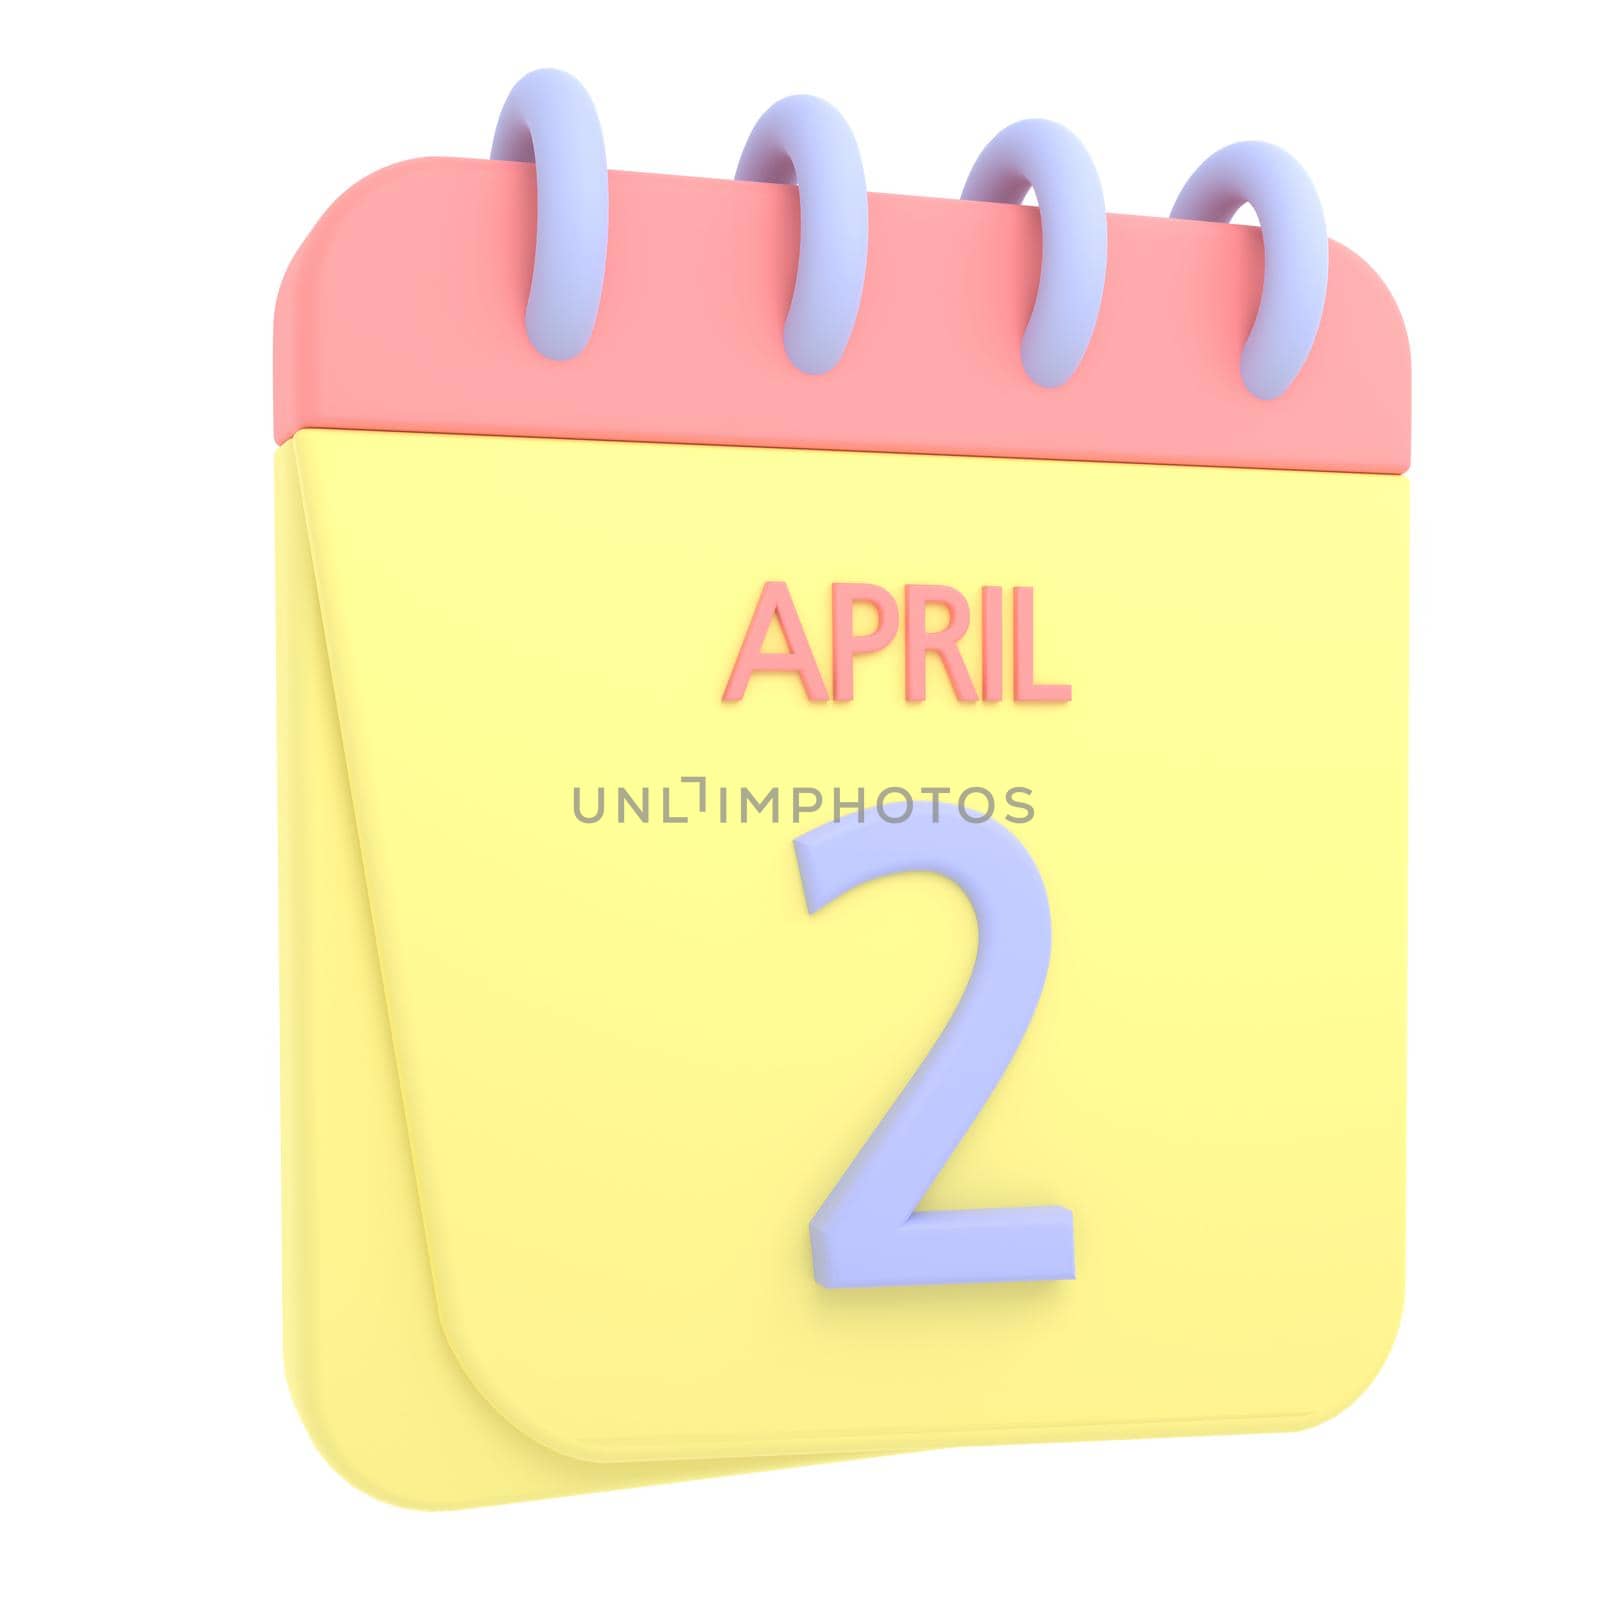 2nd April 3D calendar icon by AnnaMarin